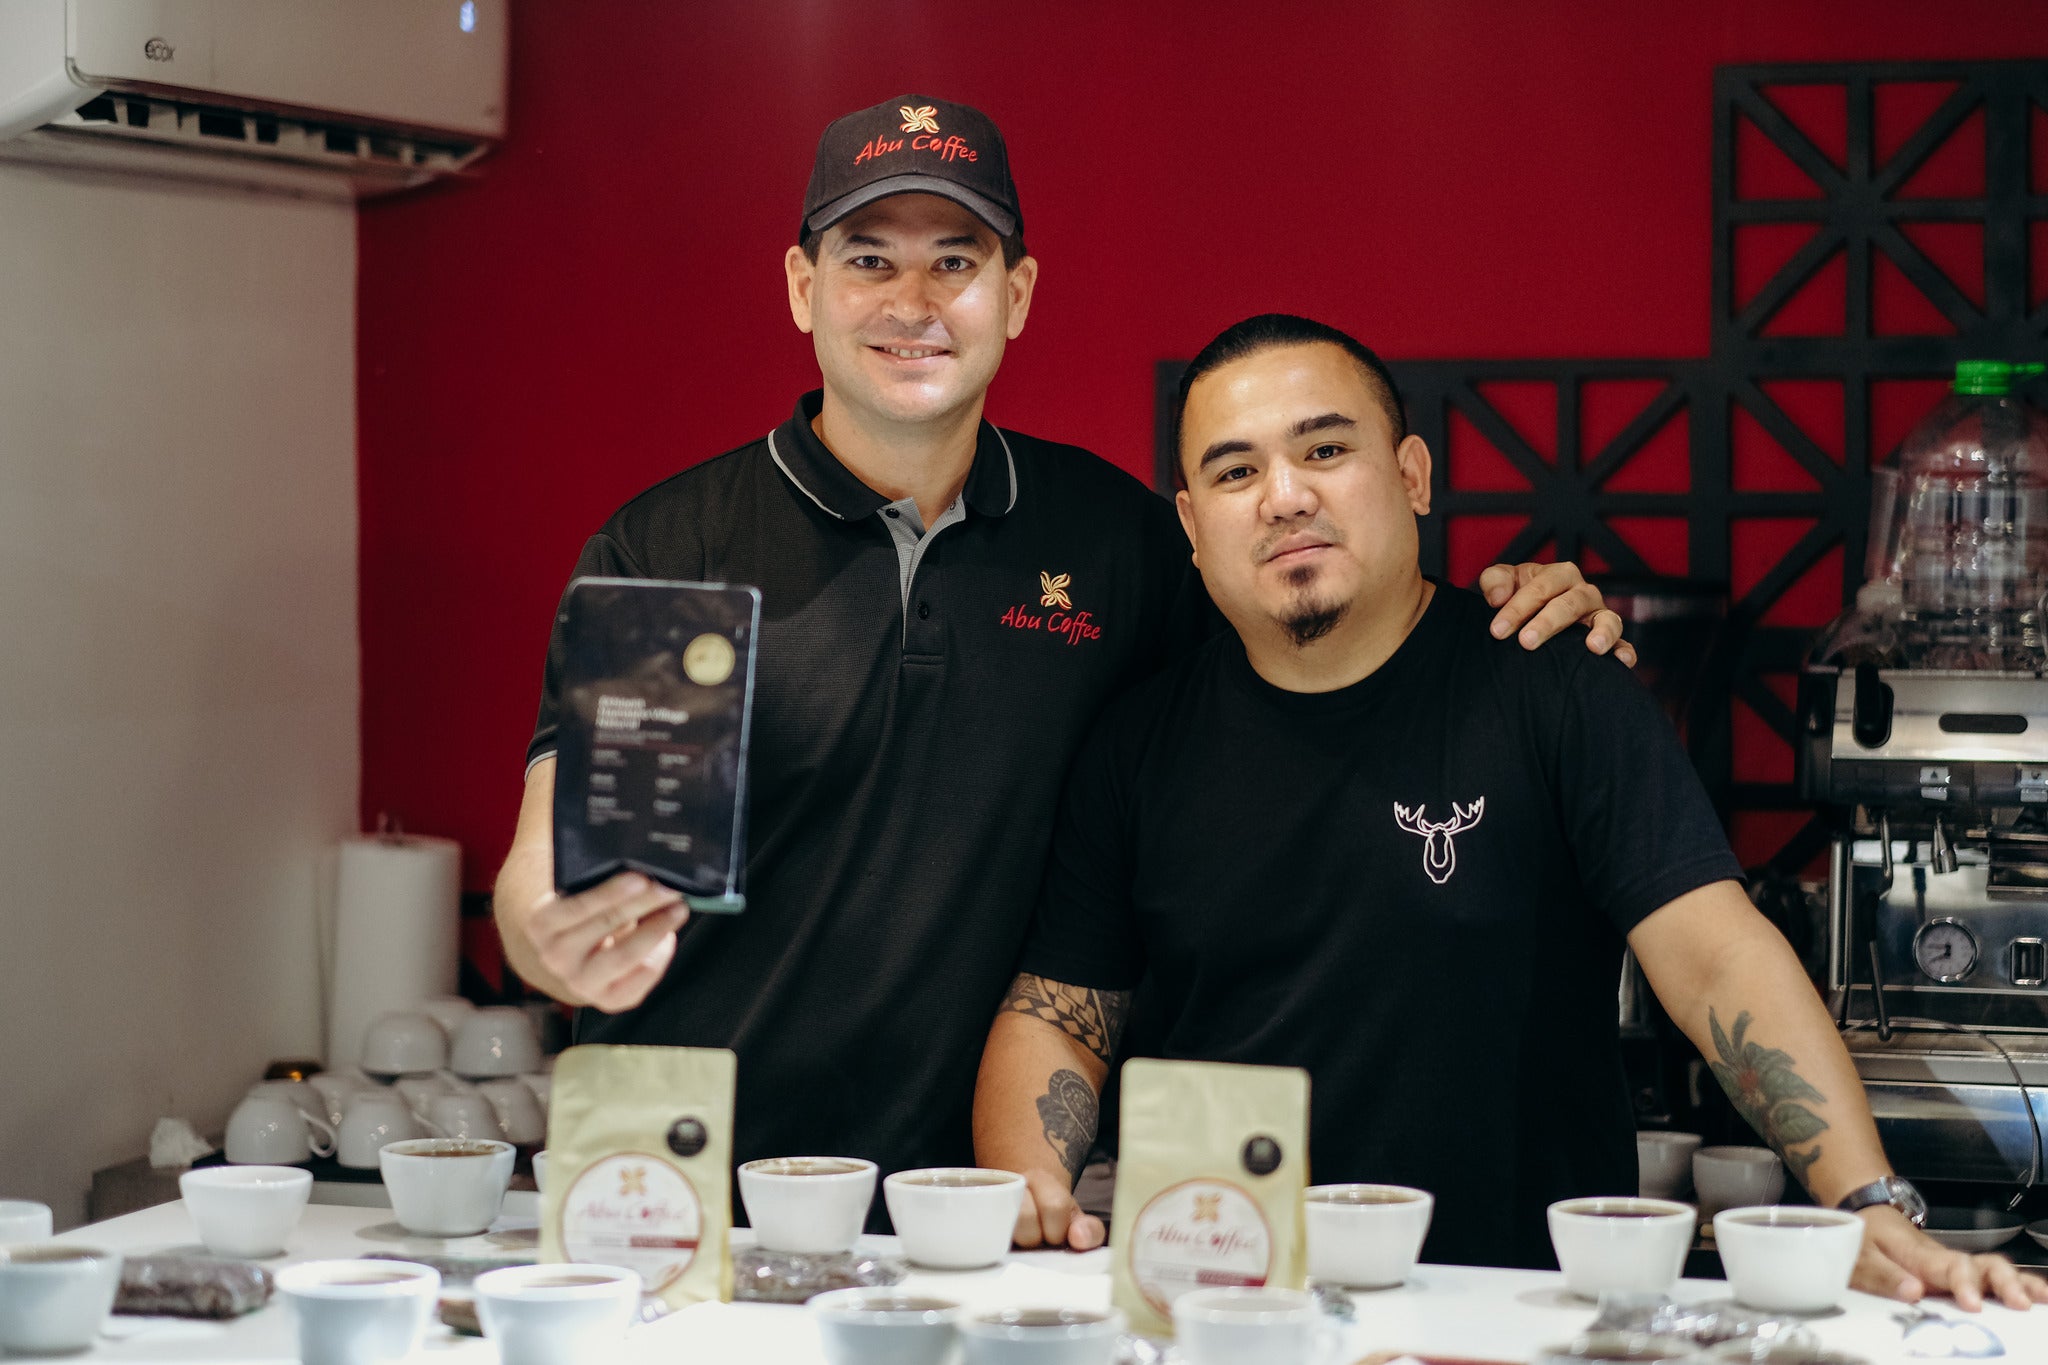 Archers Coffee visits Abu Coffee in Panama